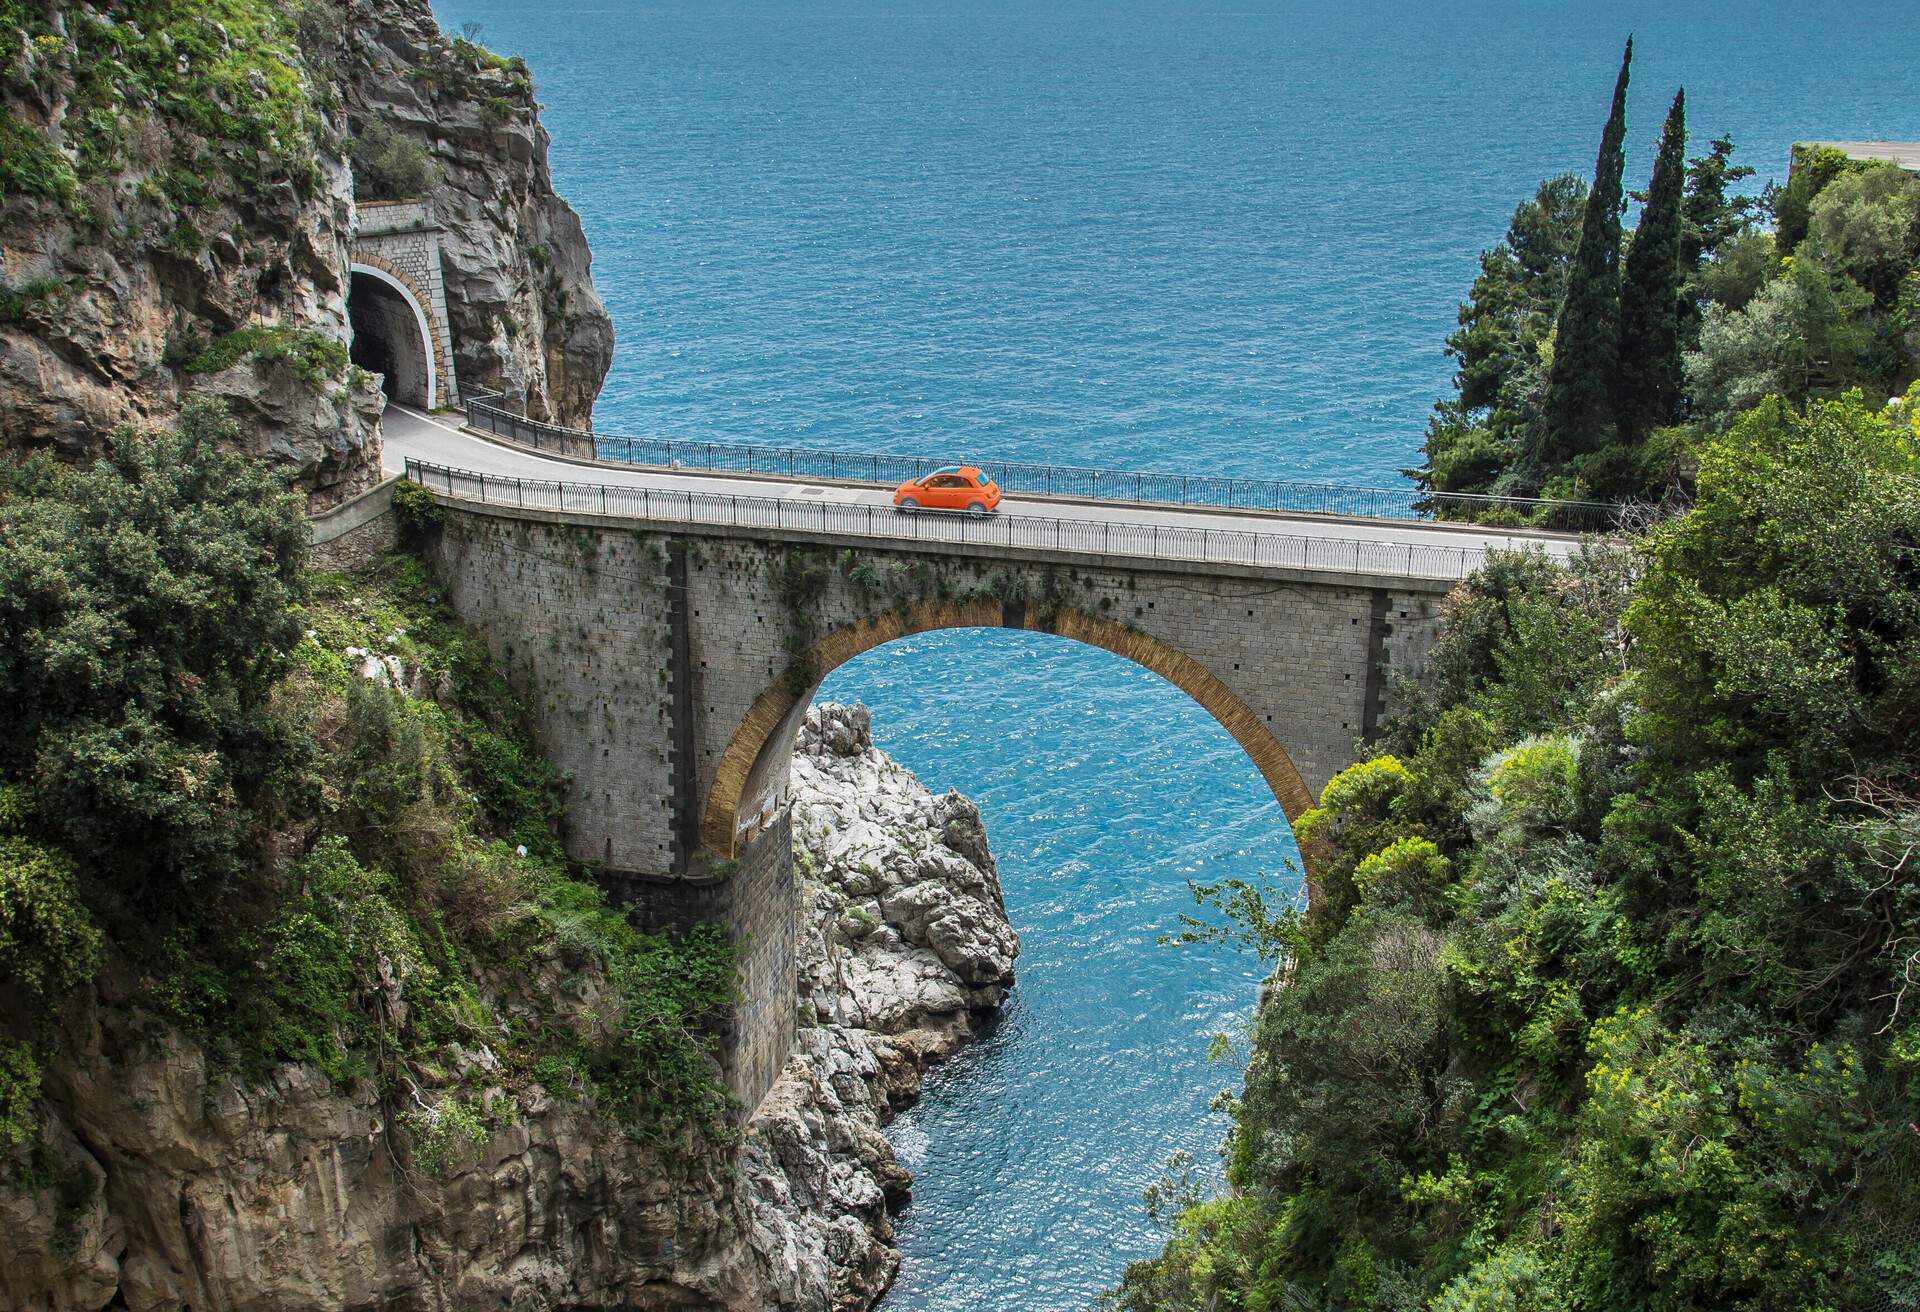 dest_italy_campania_amalfi-coast_theme_car_driving_bridge-gettyimages-170423947